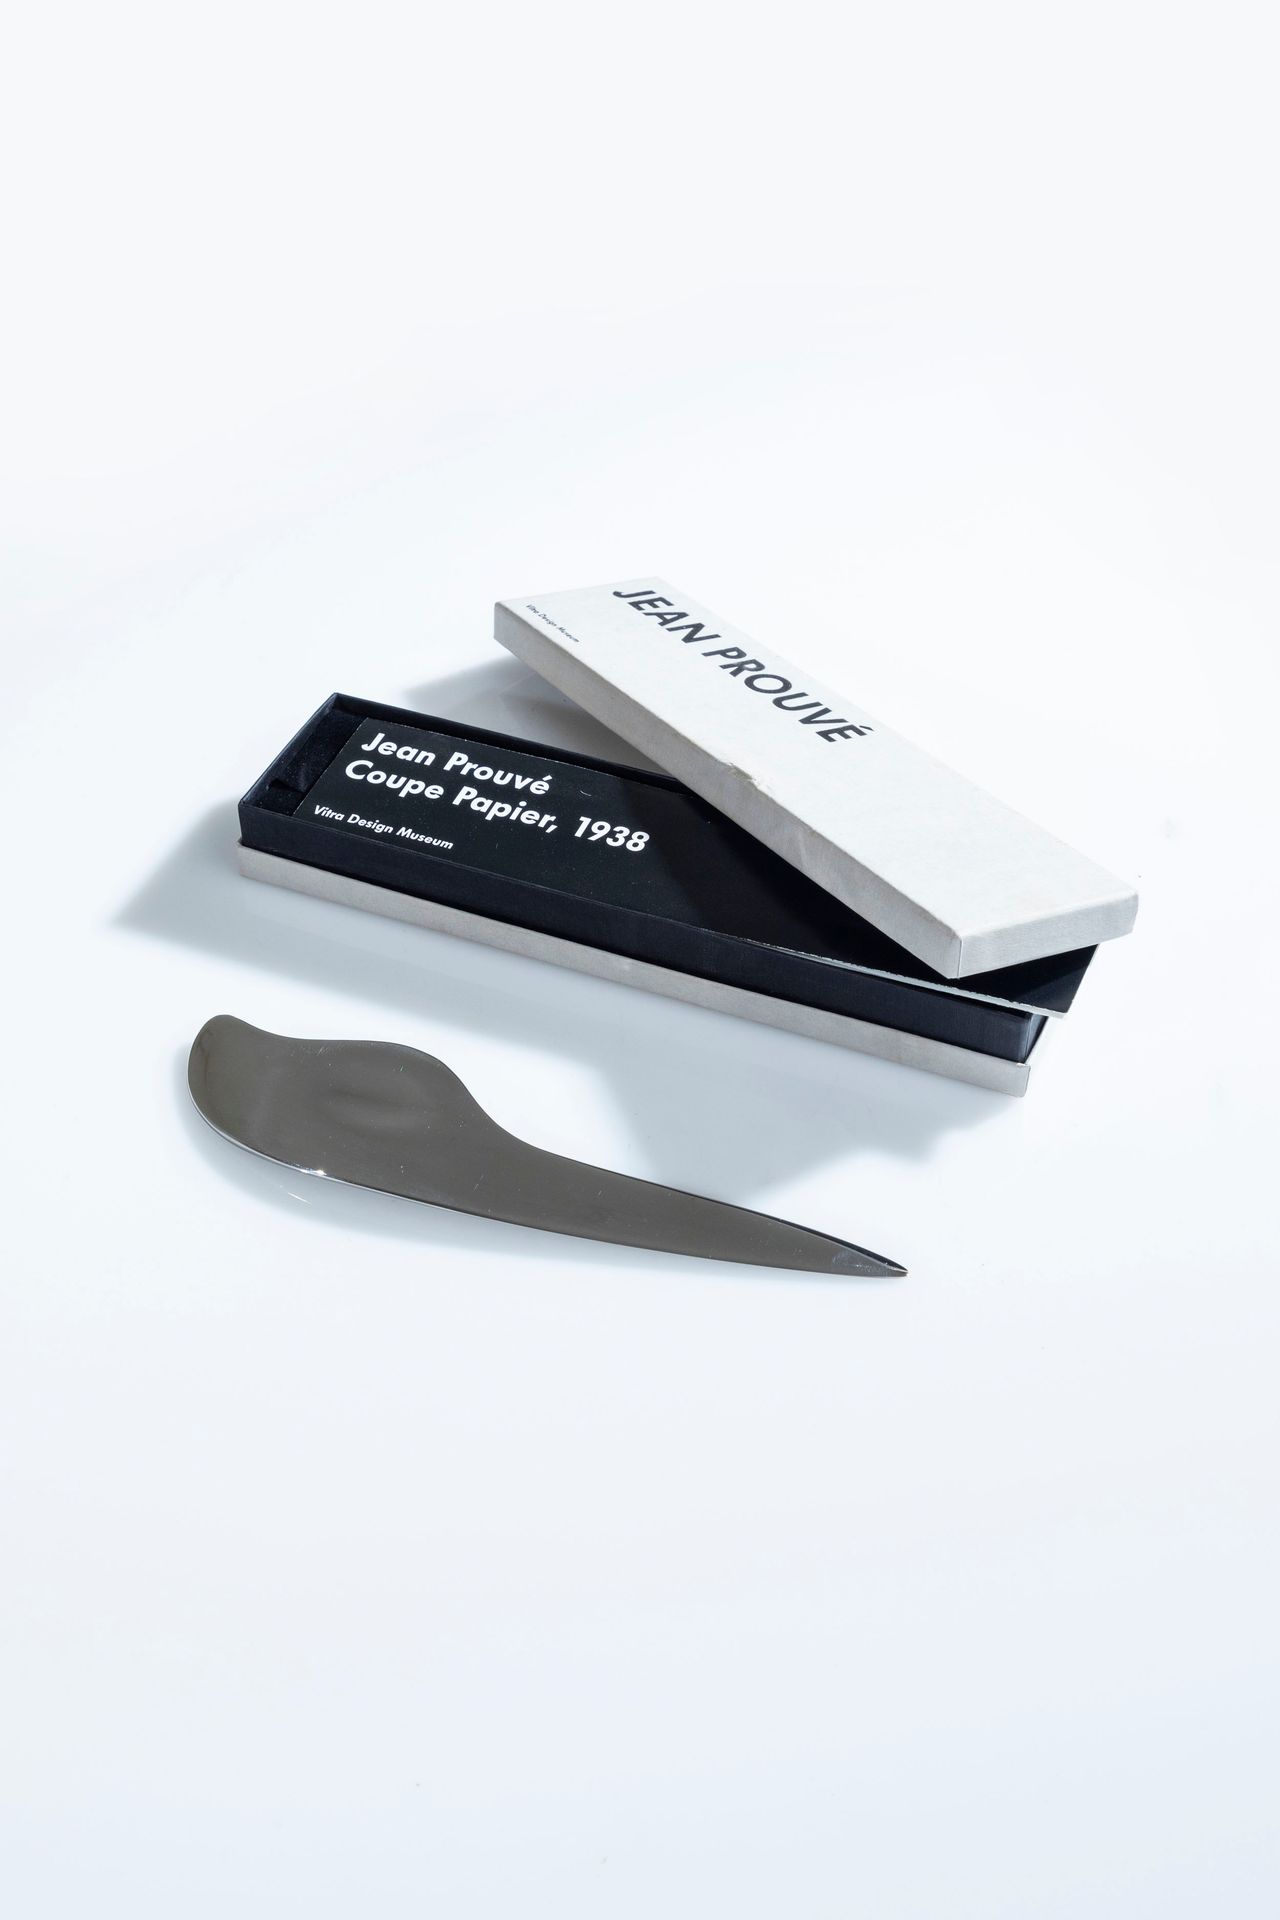 JEAN PROUVÉ Letter opener. Metal. Vitra manufacture. 
0.4x21x5.5 cm.
A PAPER KNI&hellip;